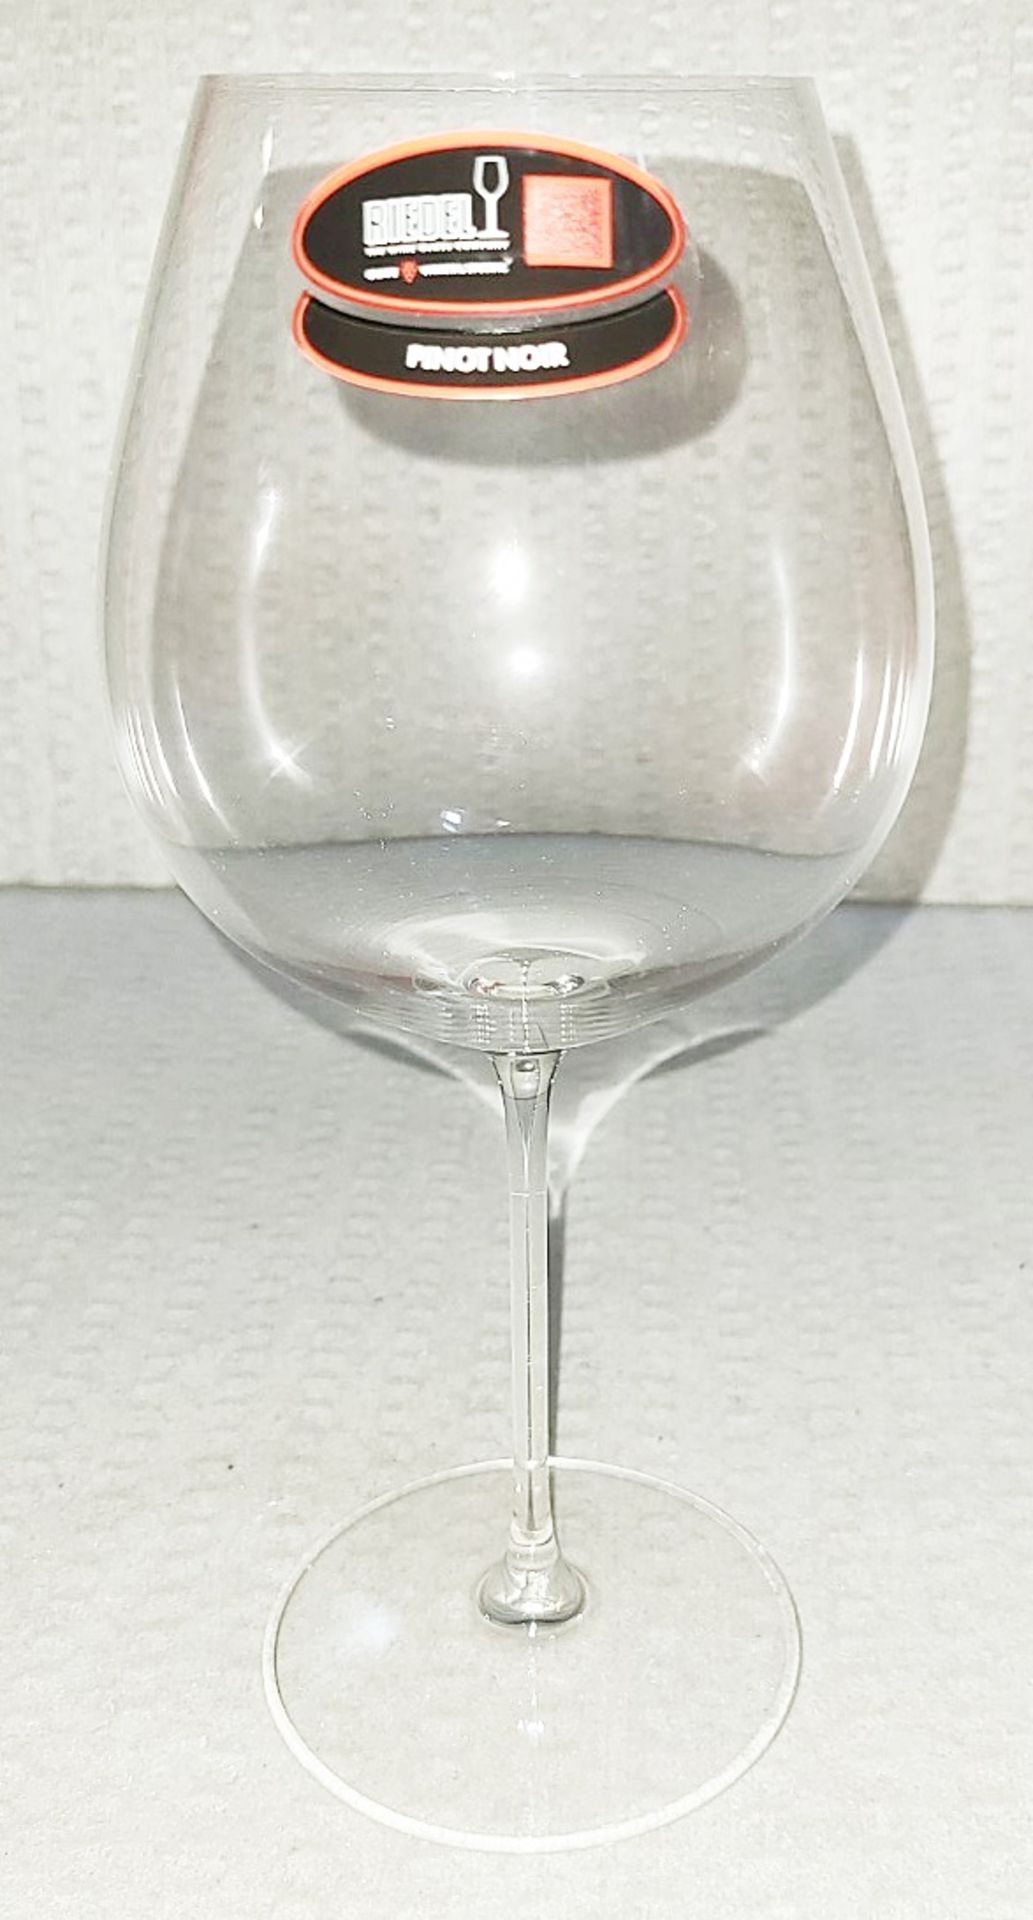 1 x Riedel 'Veritas Old World' Pinot Noir Wine Glass - Original Price £62.00 - Unused Boxed